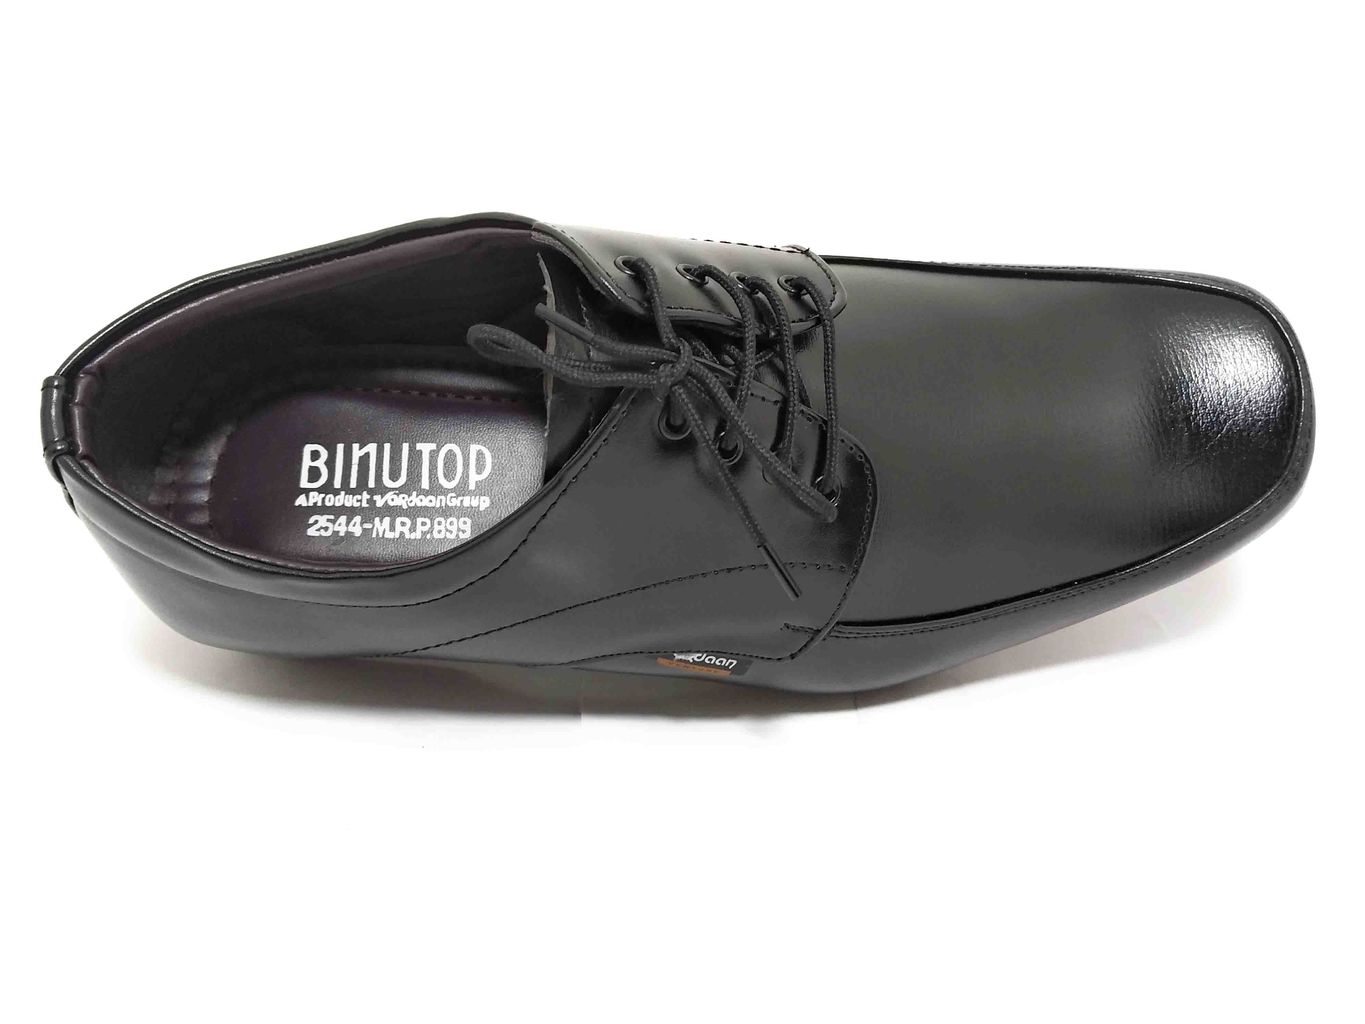 binutop formal shoes